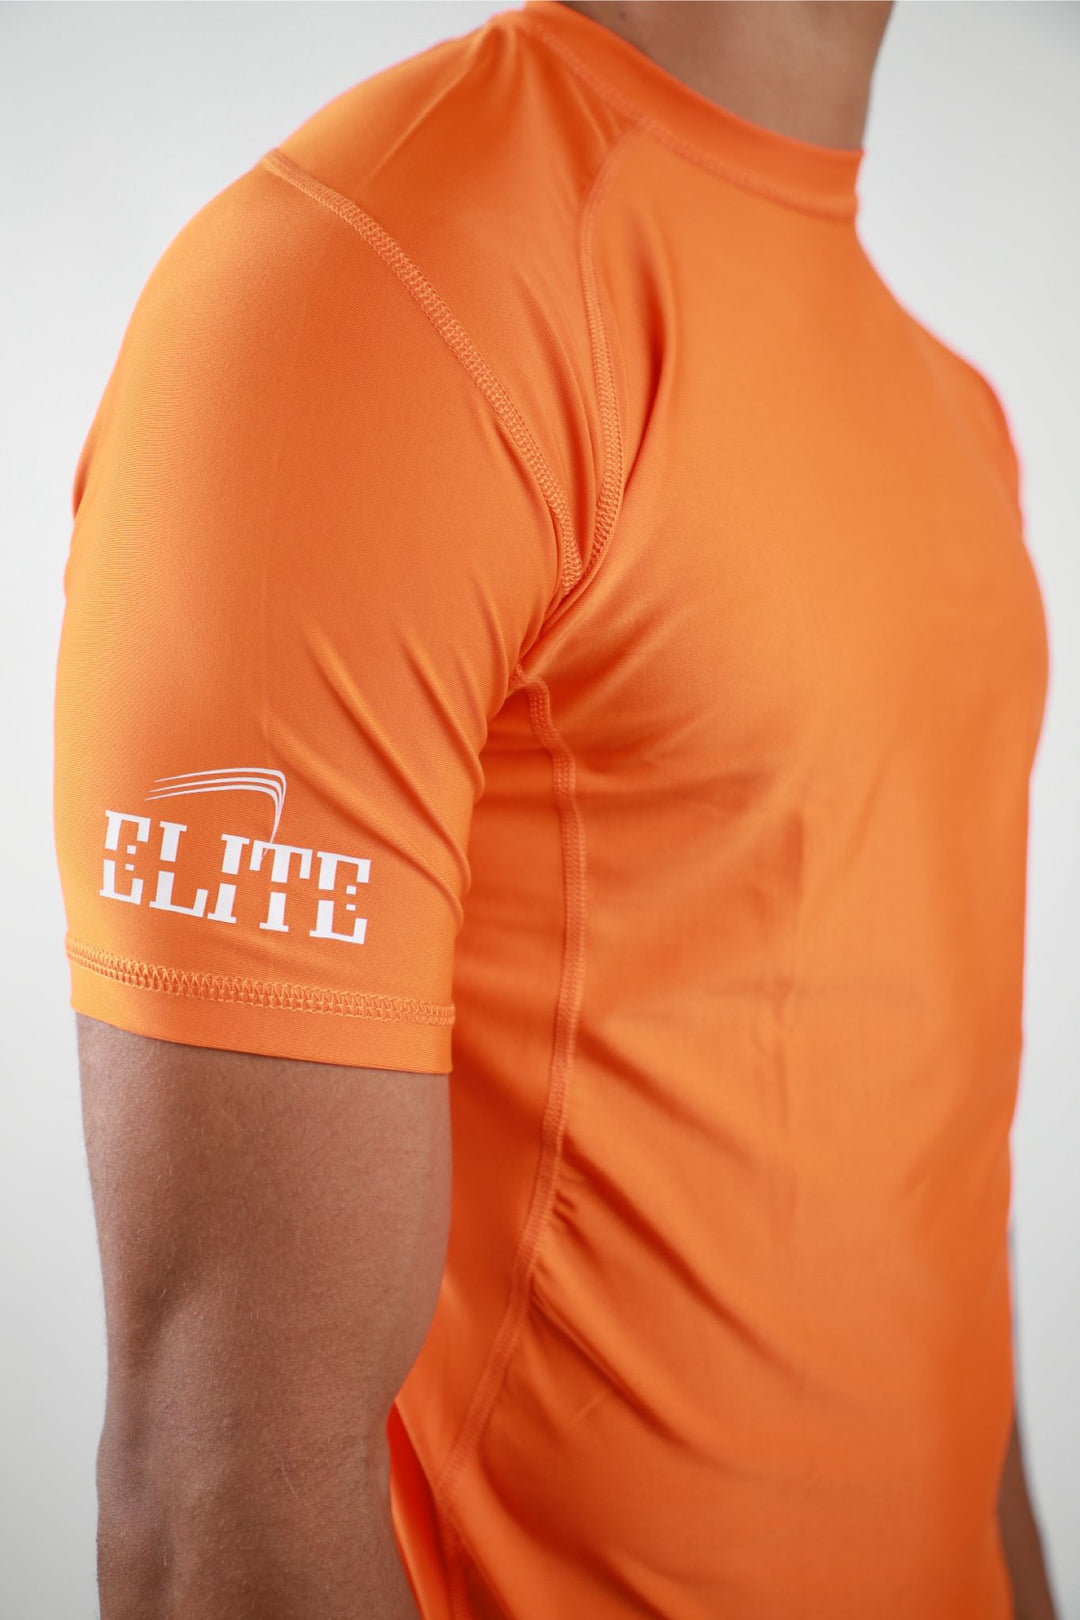 Elite - Compression Shirt Orange